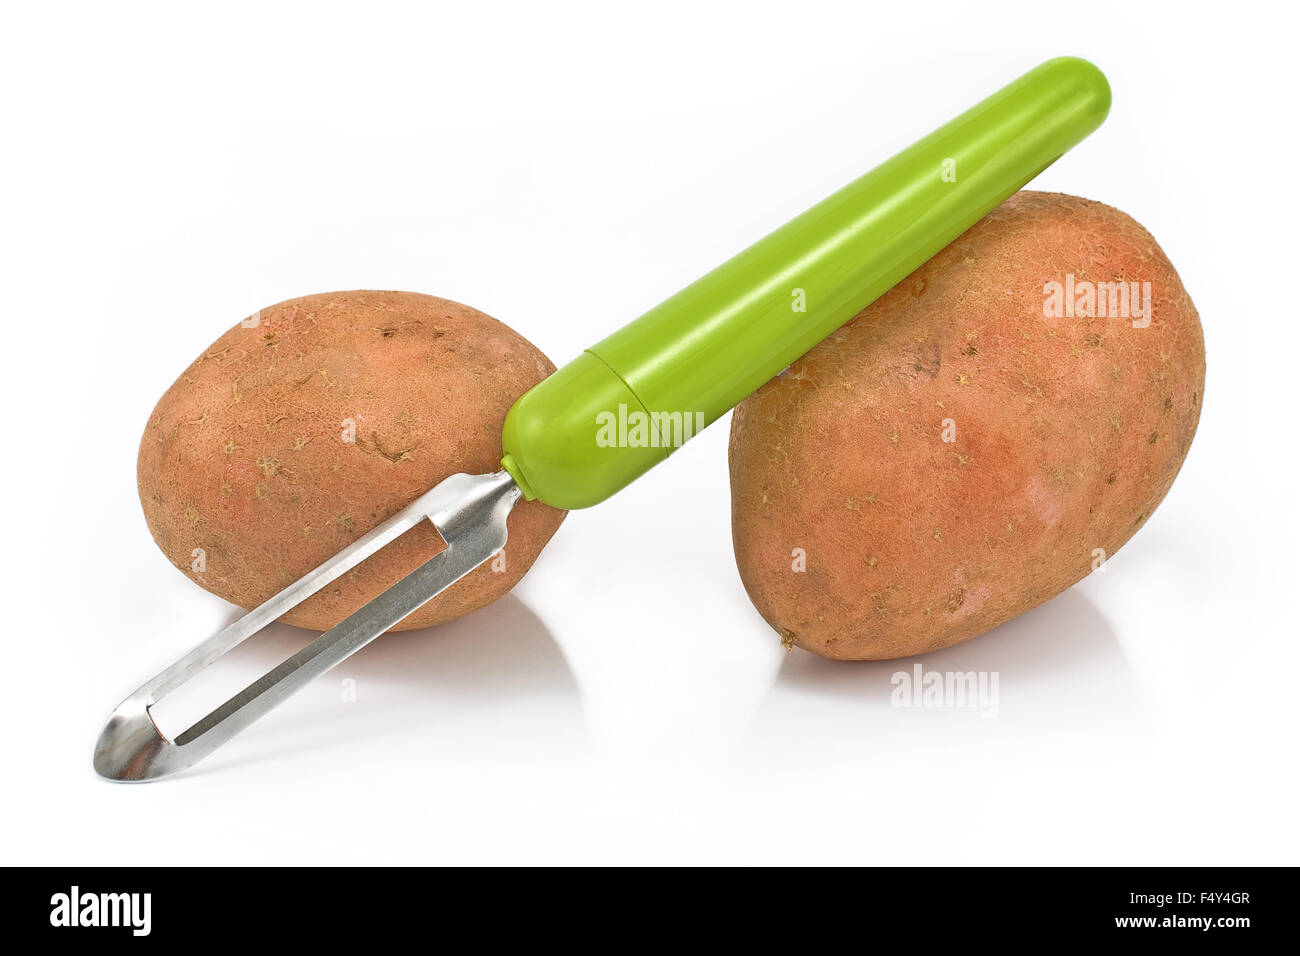 https://c8.alamy.com/comp/F4Y4GR/potatoes-with-vegetable-peeler-on-white-F4Y4GR.jpg